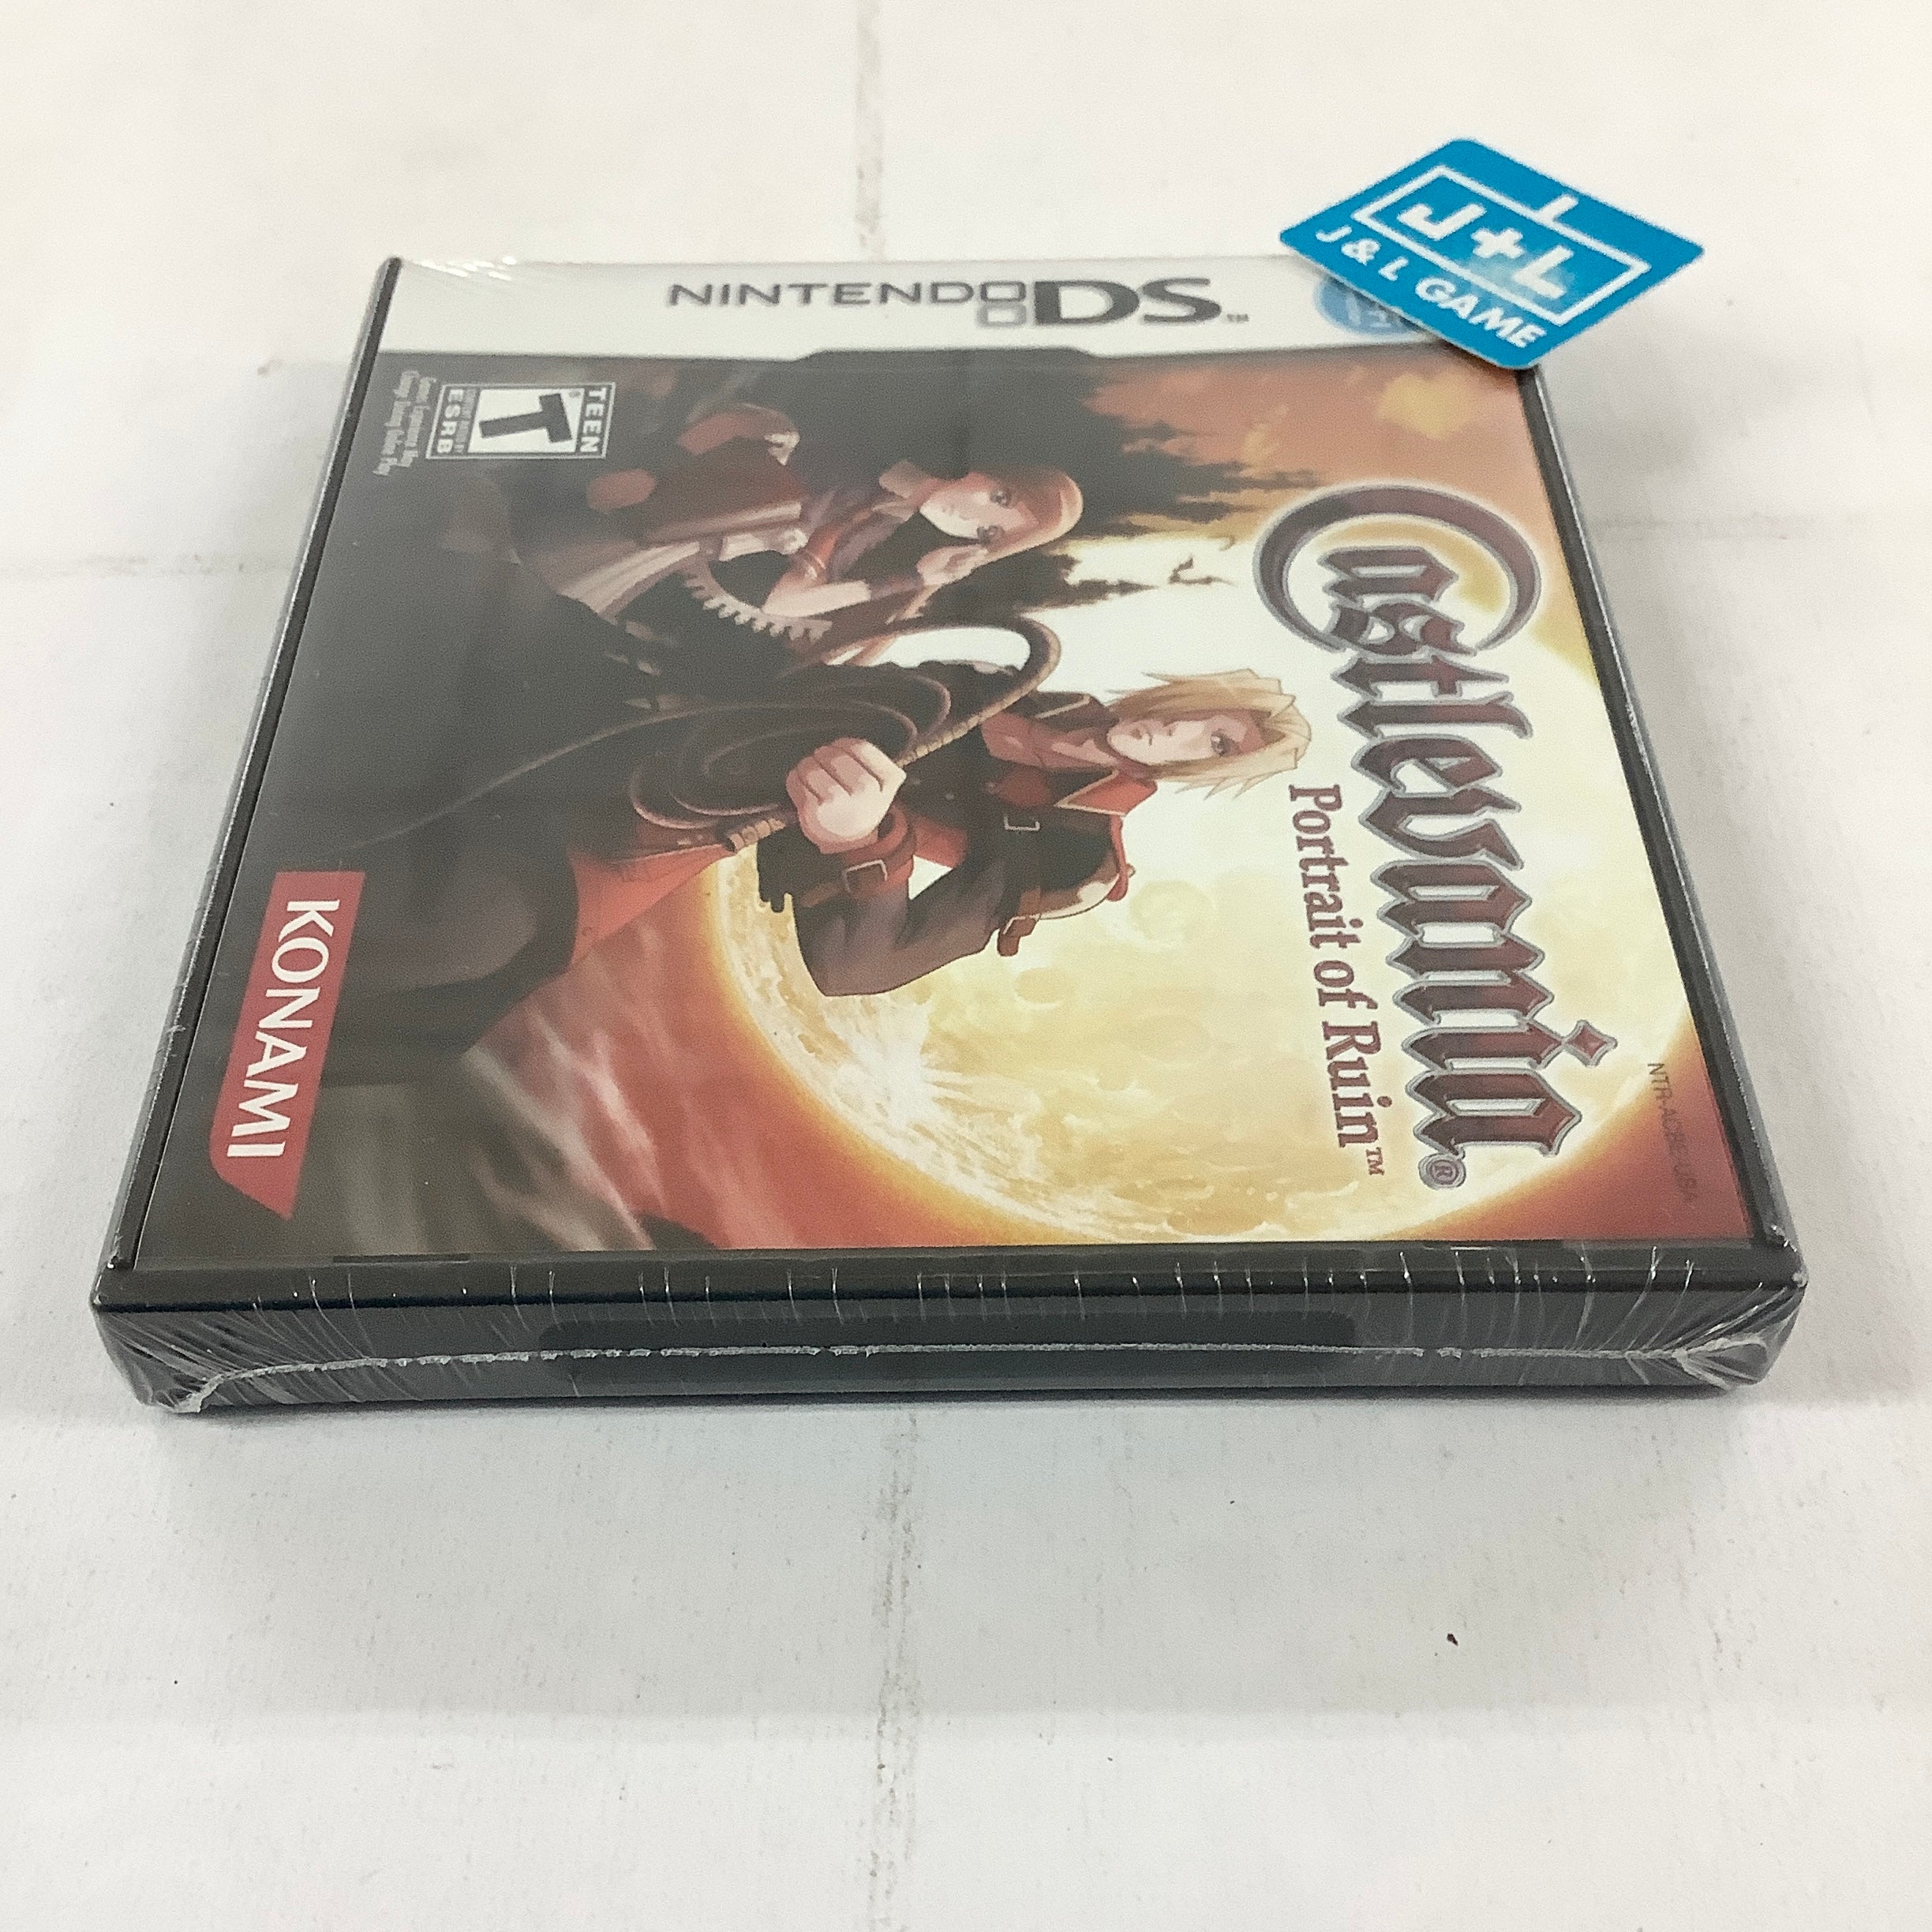 Castlevania: Portrait of Ruin - (NDS) Nintendo DS Video Games Konami   